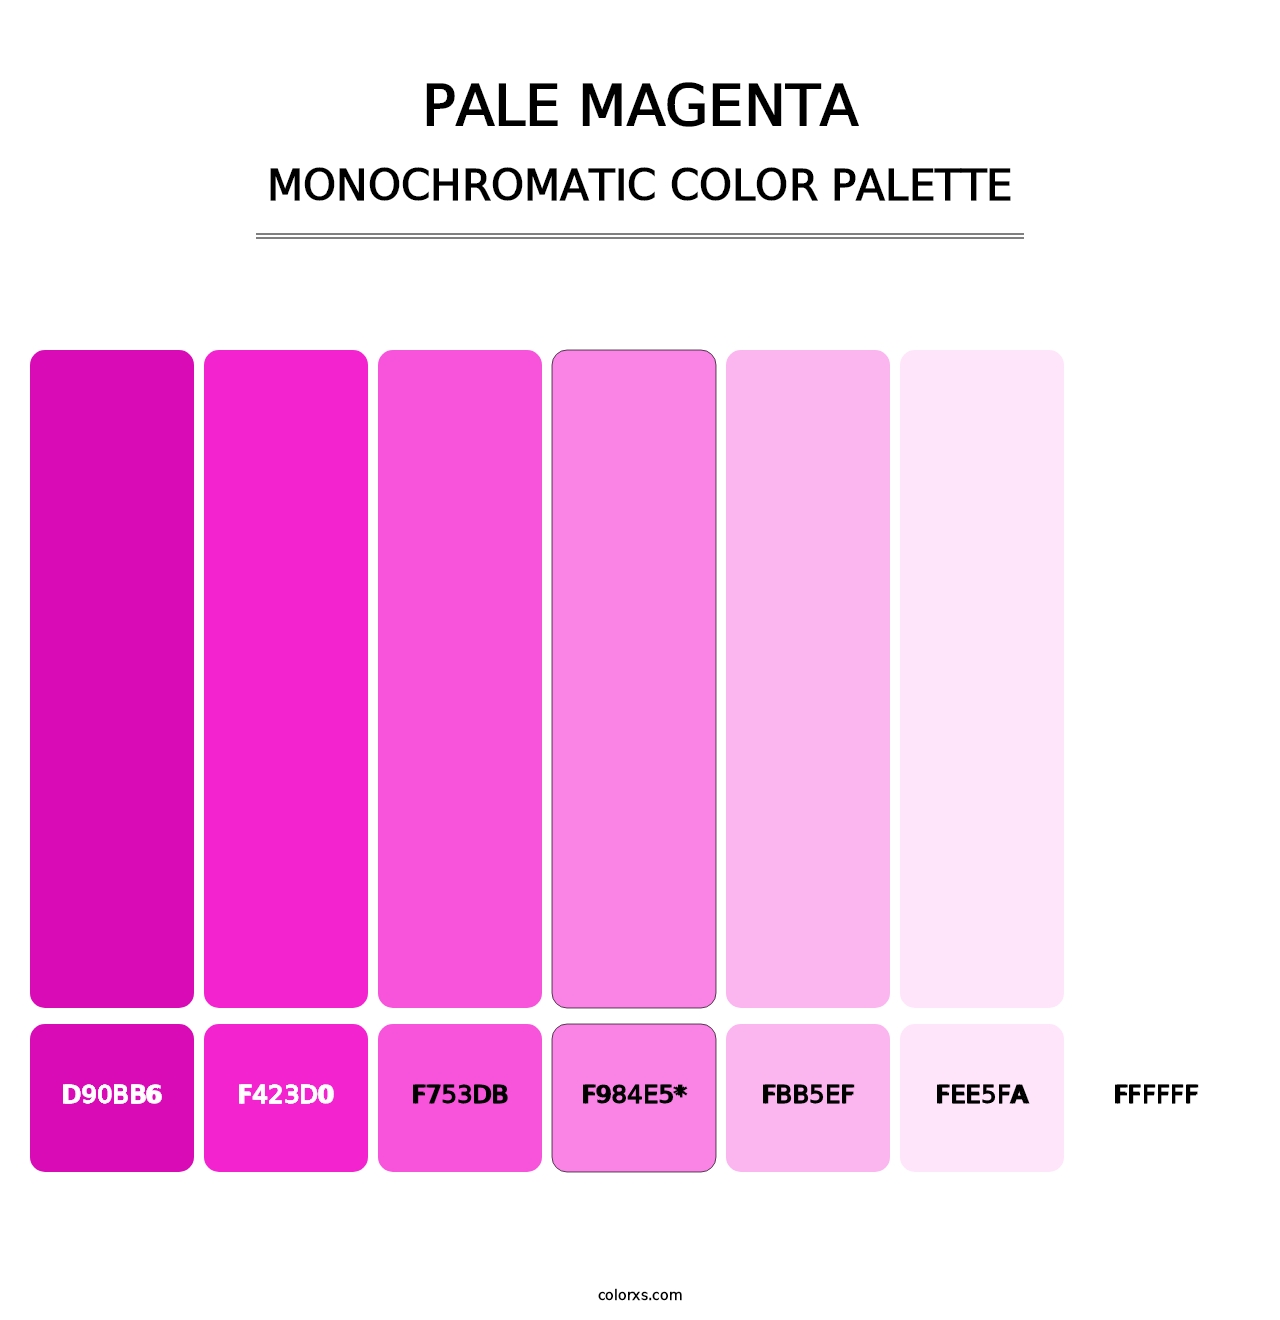 Pale Magenta - Monochromatic Color Palette